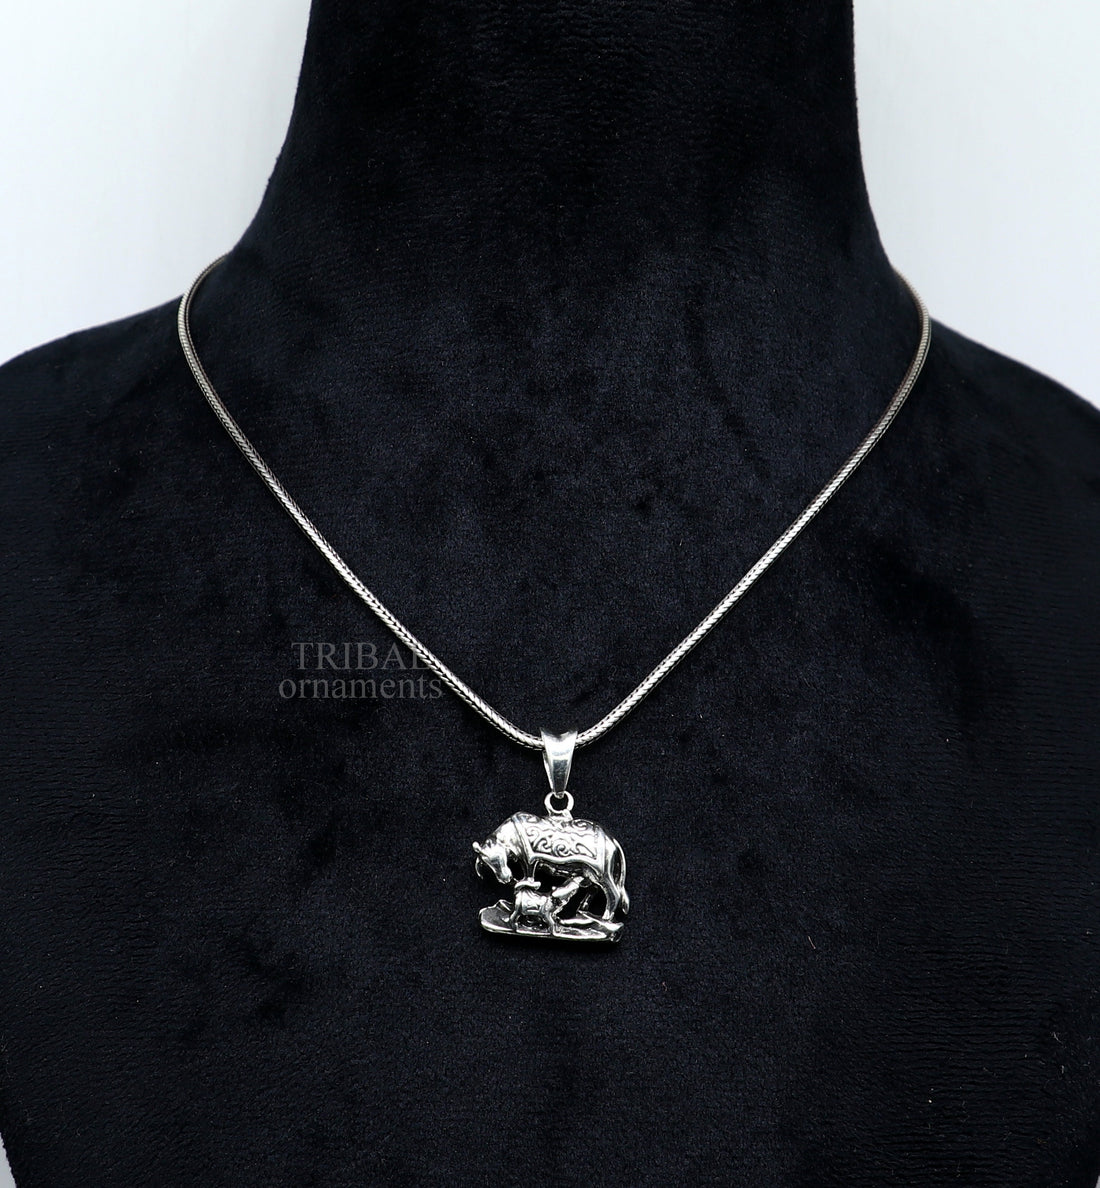 925 sterling silver handmade elegant divine kamdhenu cow with calf pendant, amazing cow and calf pendant attractive pendant ssp1568 - TRIBAL ORNAMENTS